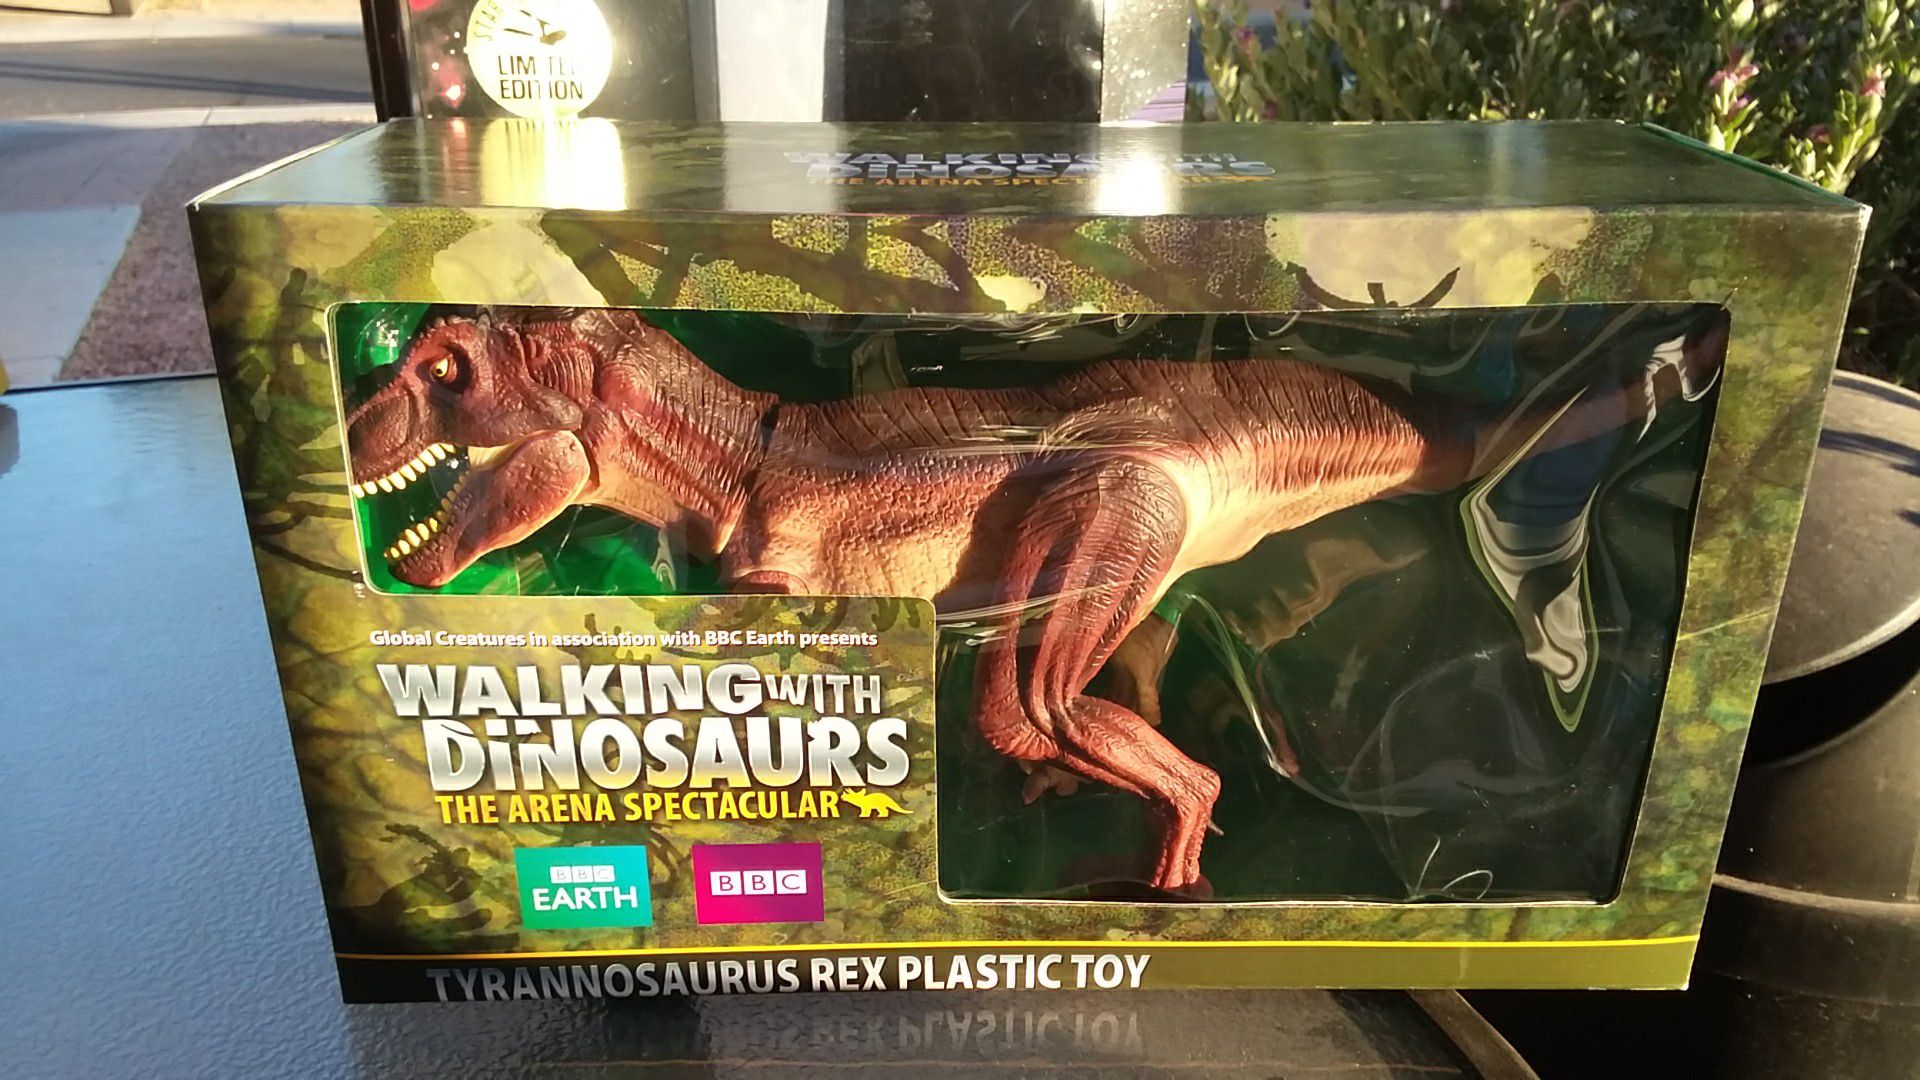 BBC arena spectacular 2012 walking with dinosaurs dinosaur tyrannosaurus rex plastic figure toy mib